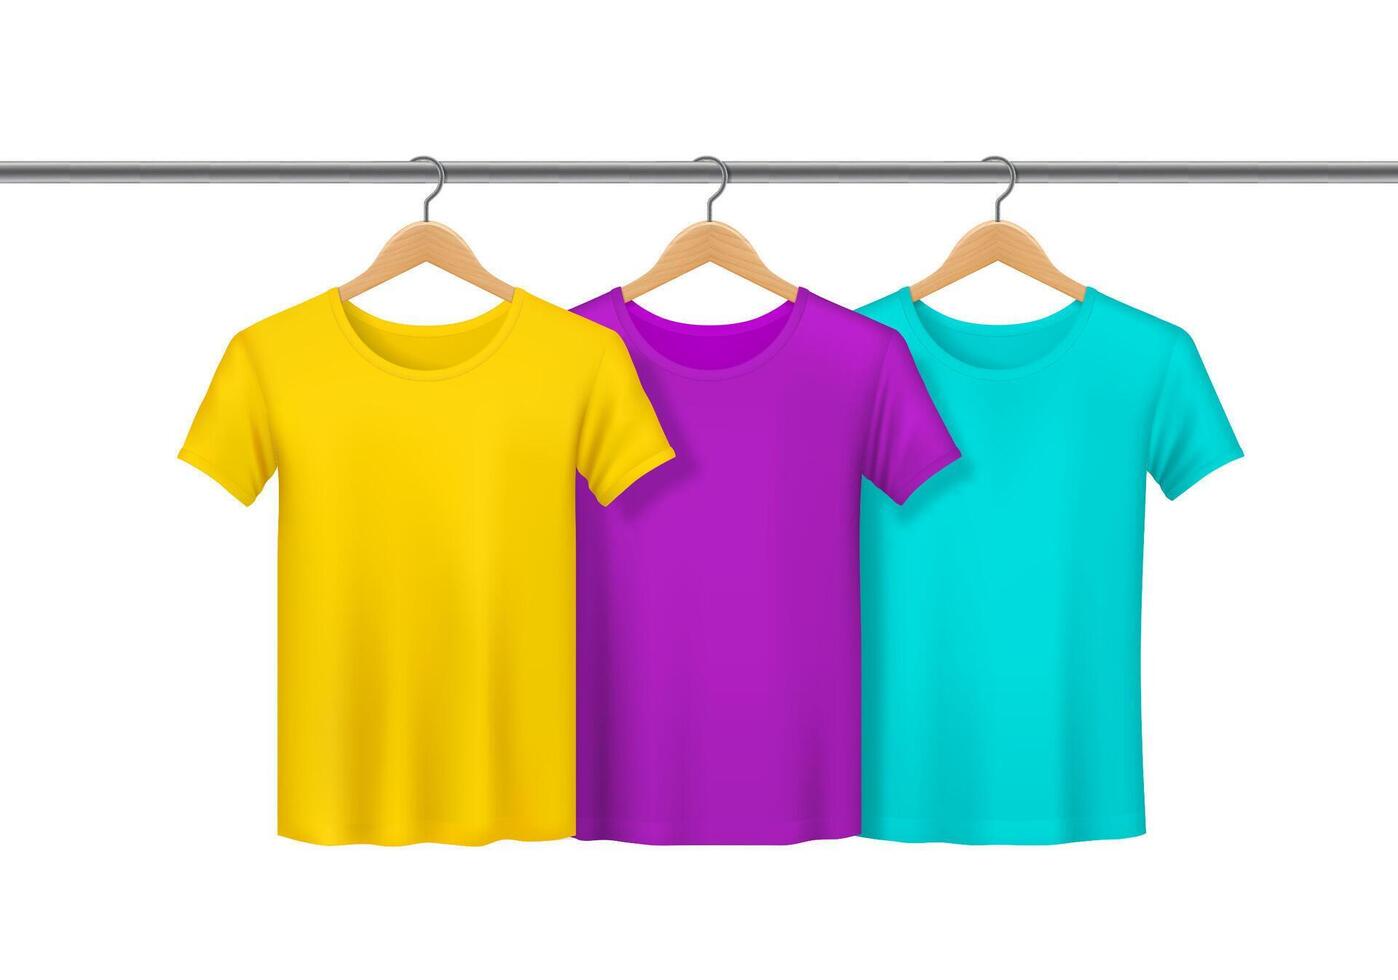 Cotton shirt store, T-shirts on shop rack hangers vector